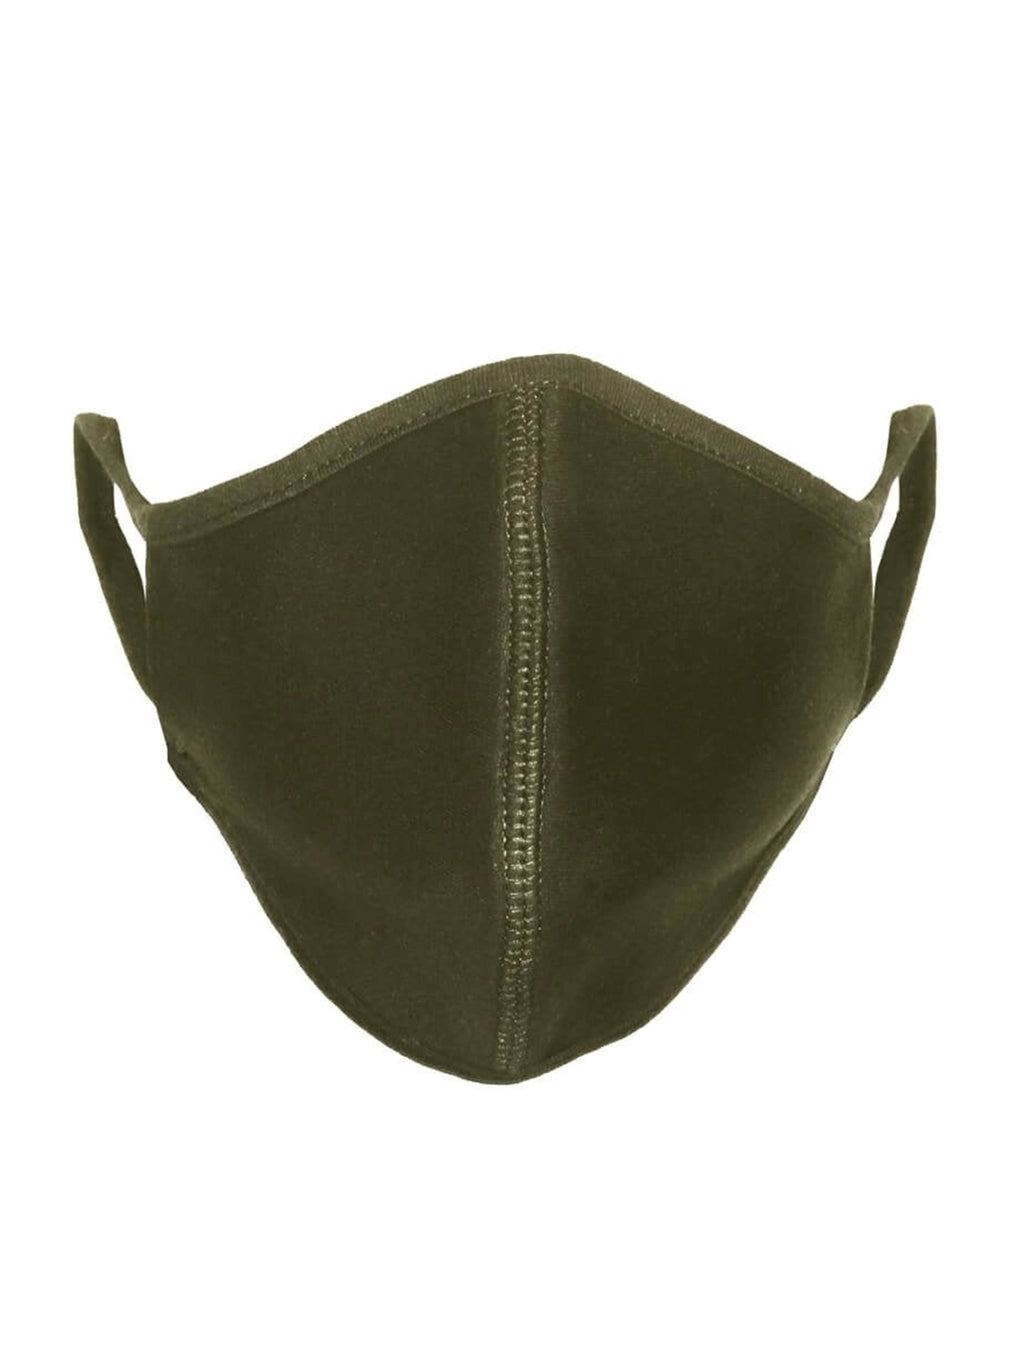 Cloth mask - Olive Green (organic cotton)